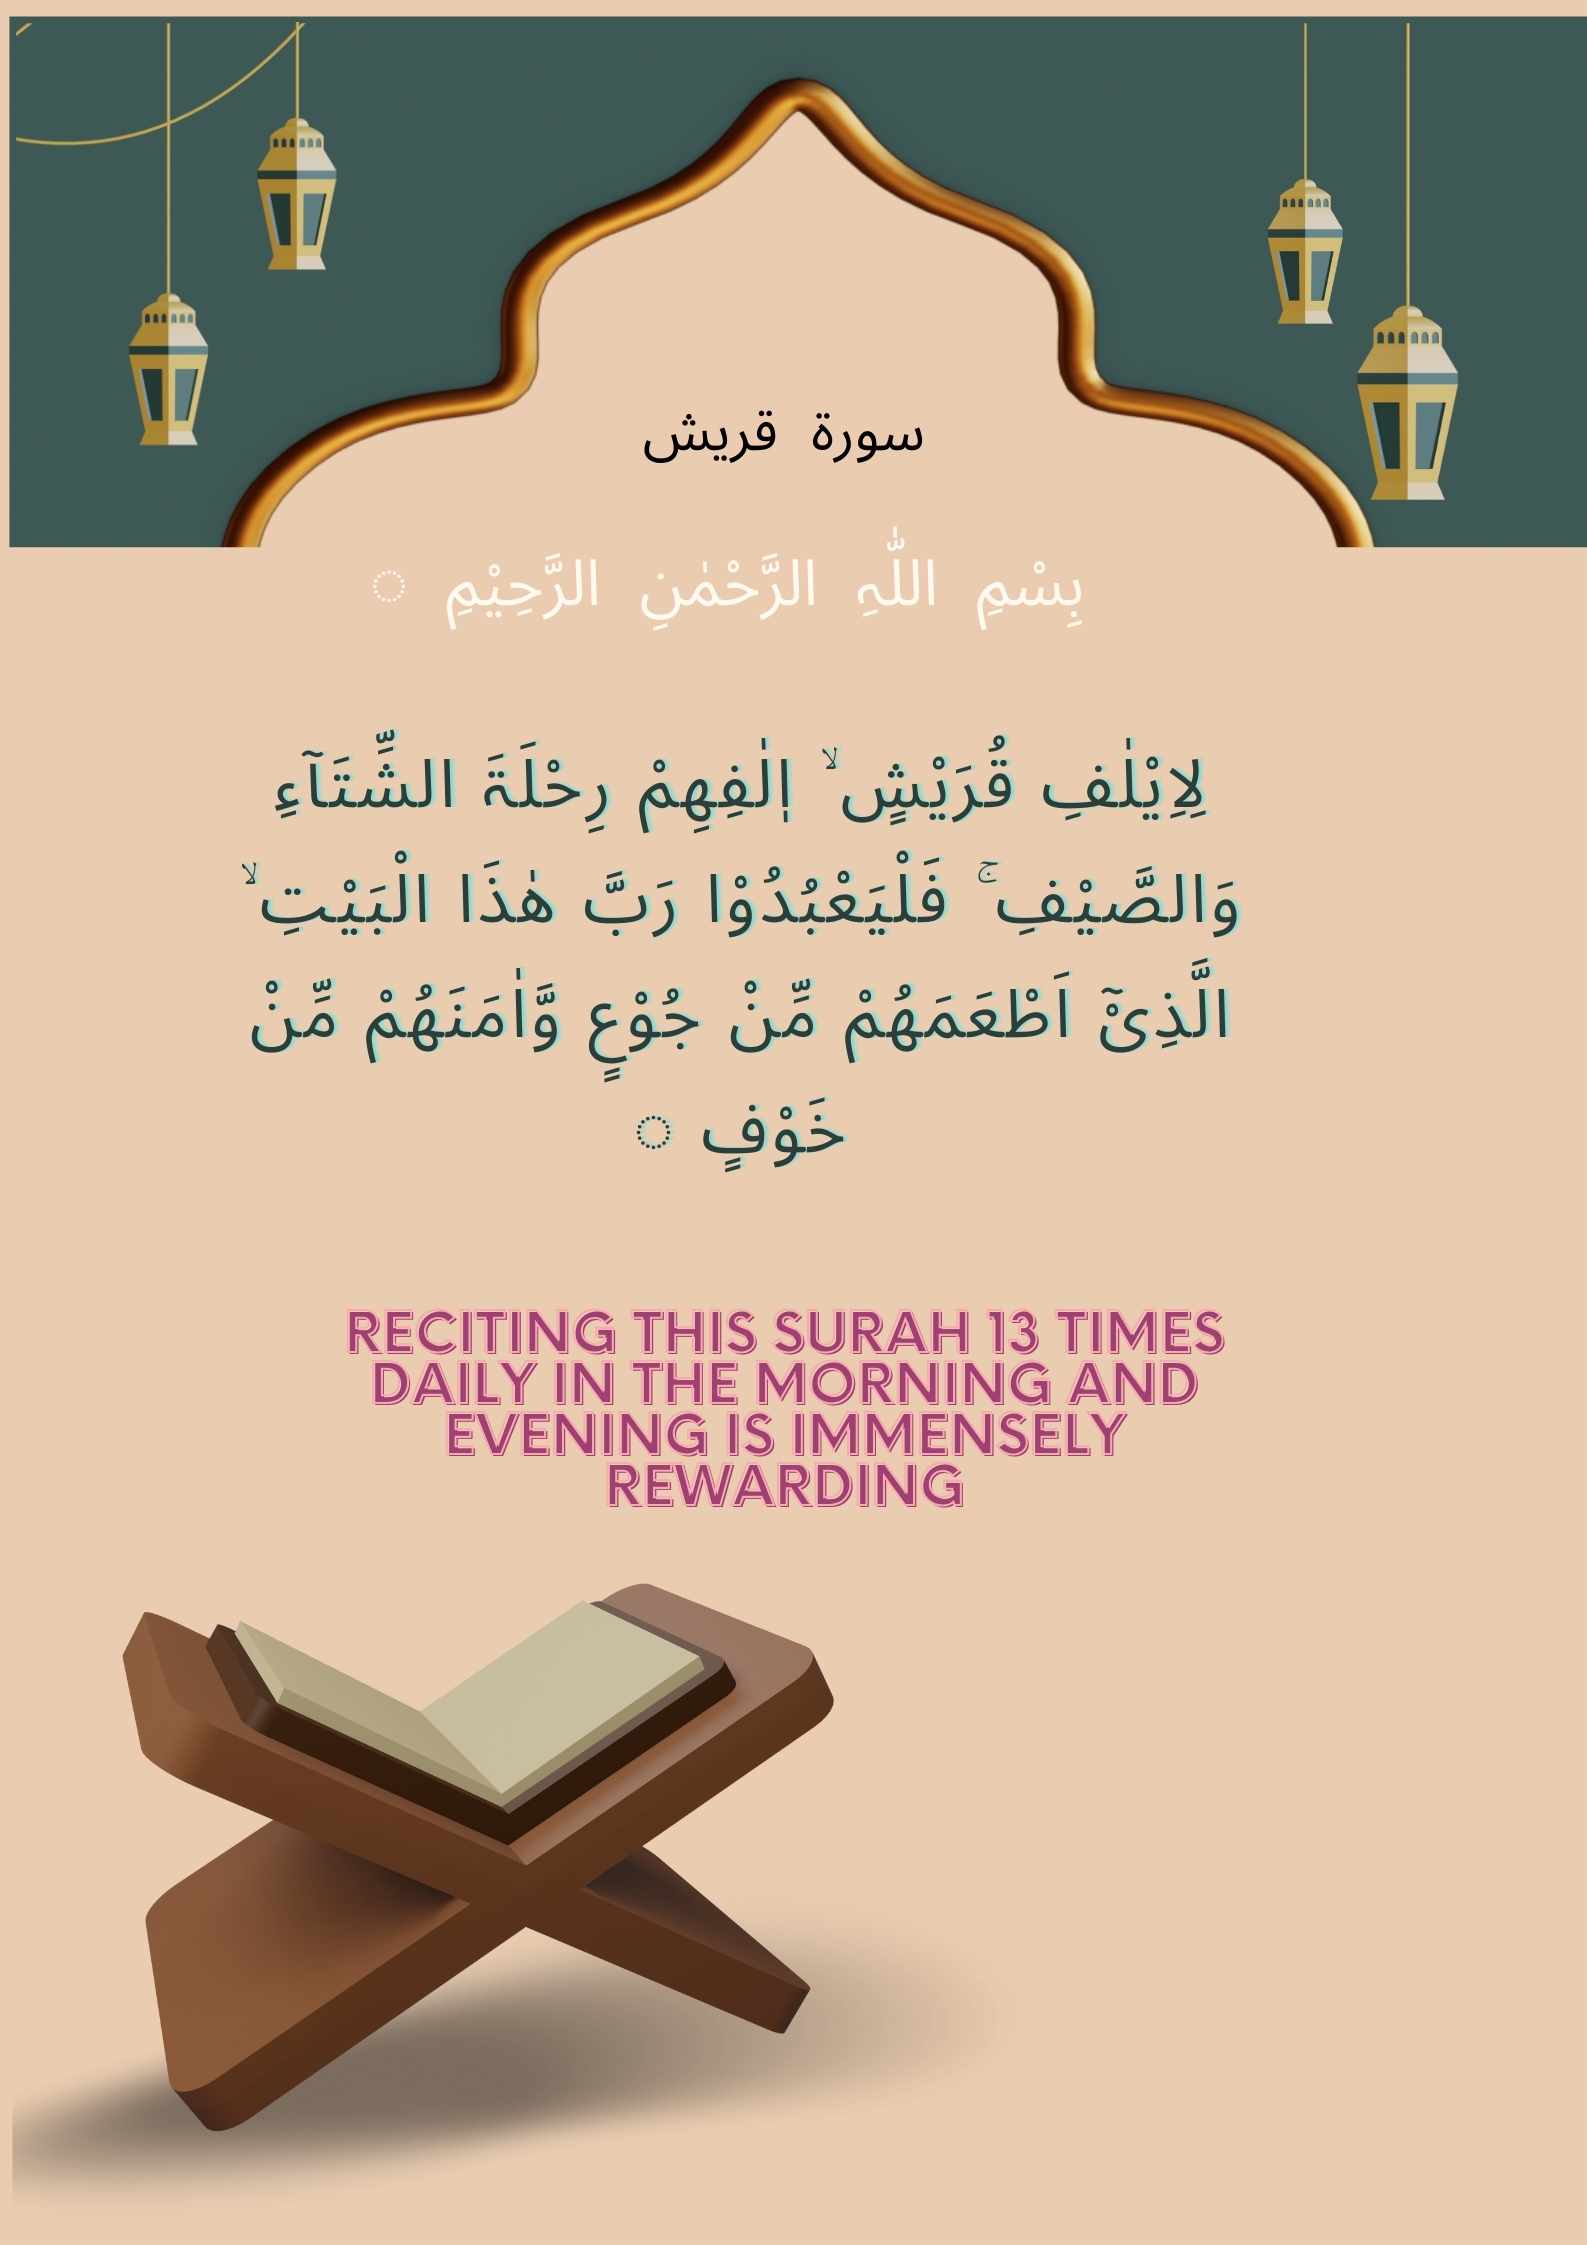 Surah Quraish translation